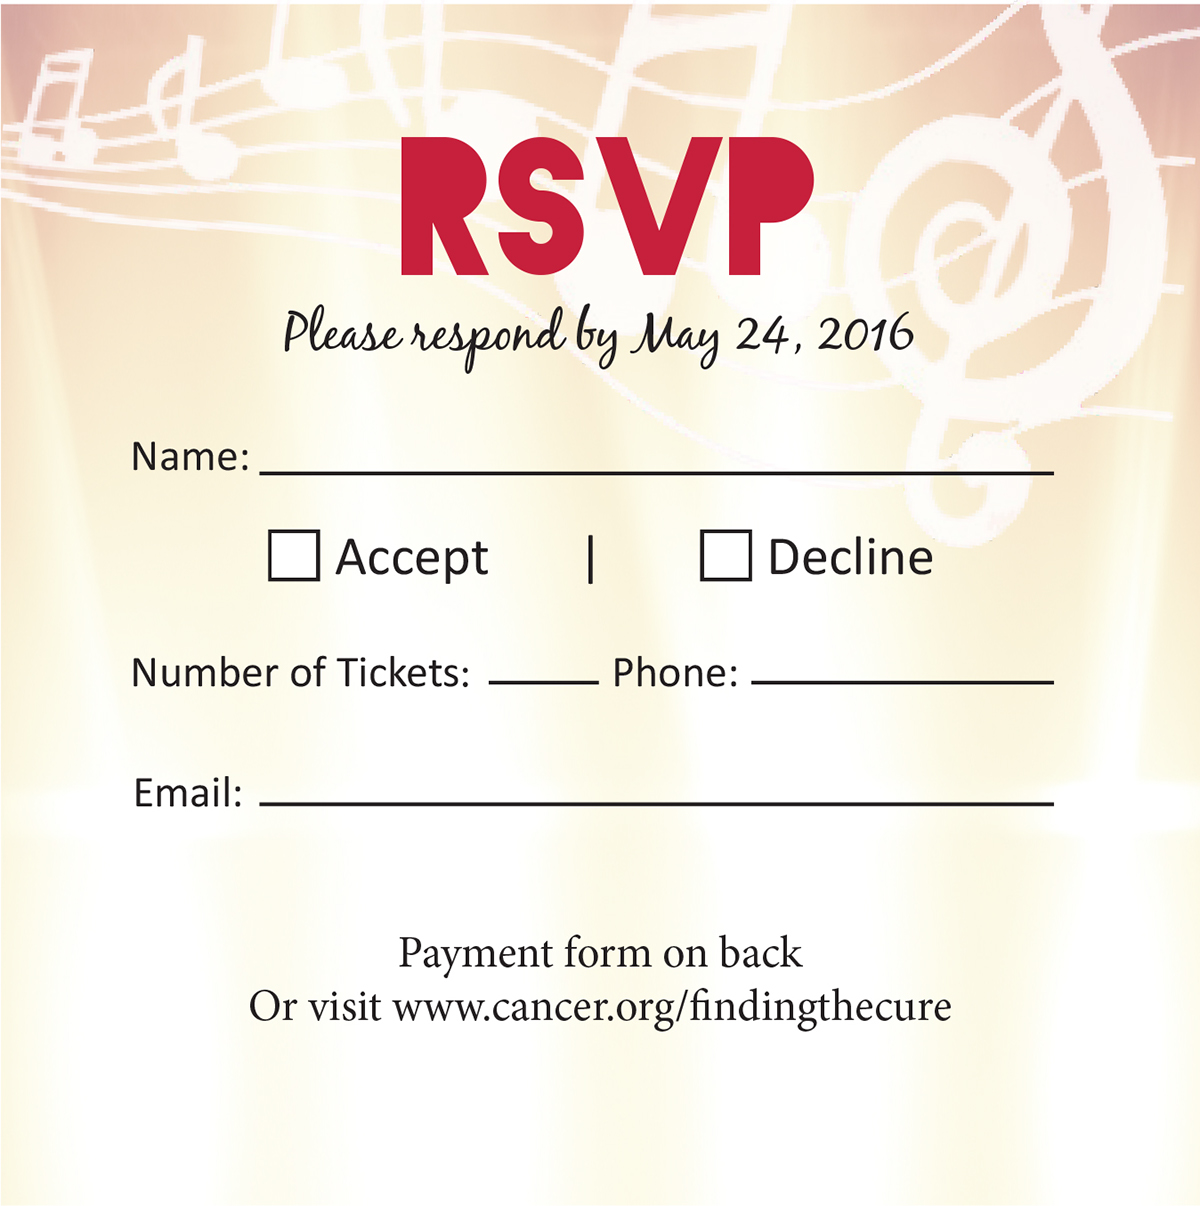 Invitation rsvp additional information card